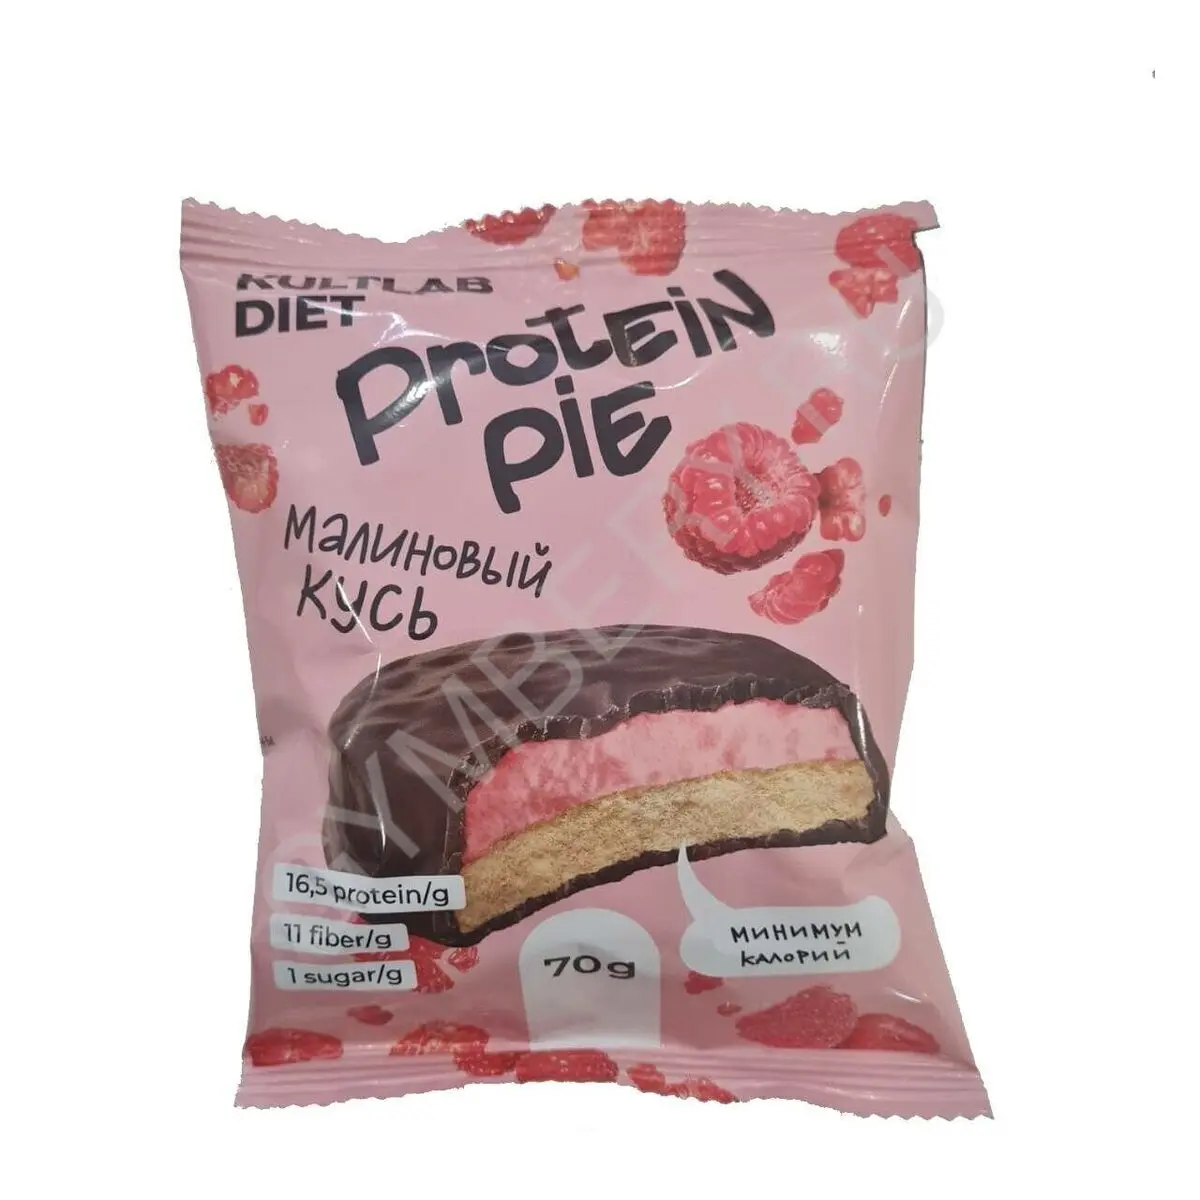 Kultlab Protein Pie, глазурь, 60 гр (Малиновый кусь) шт, арт. 0105016